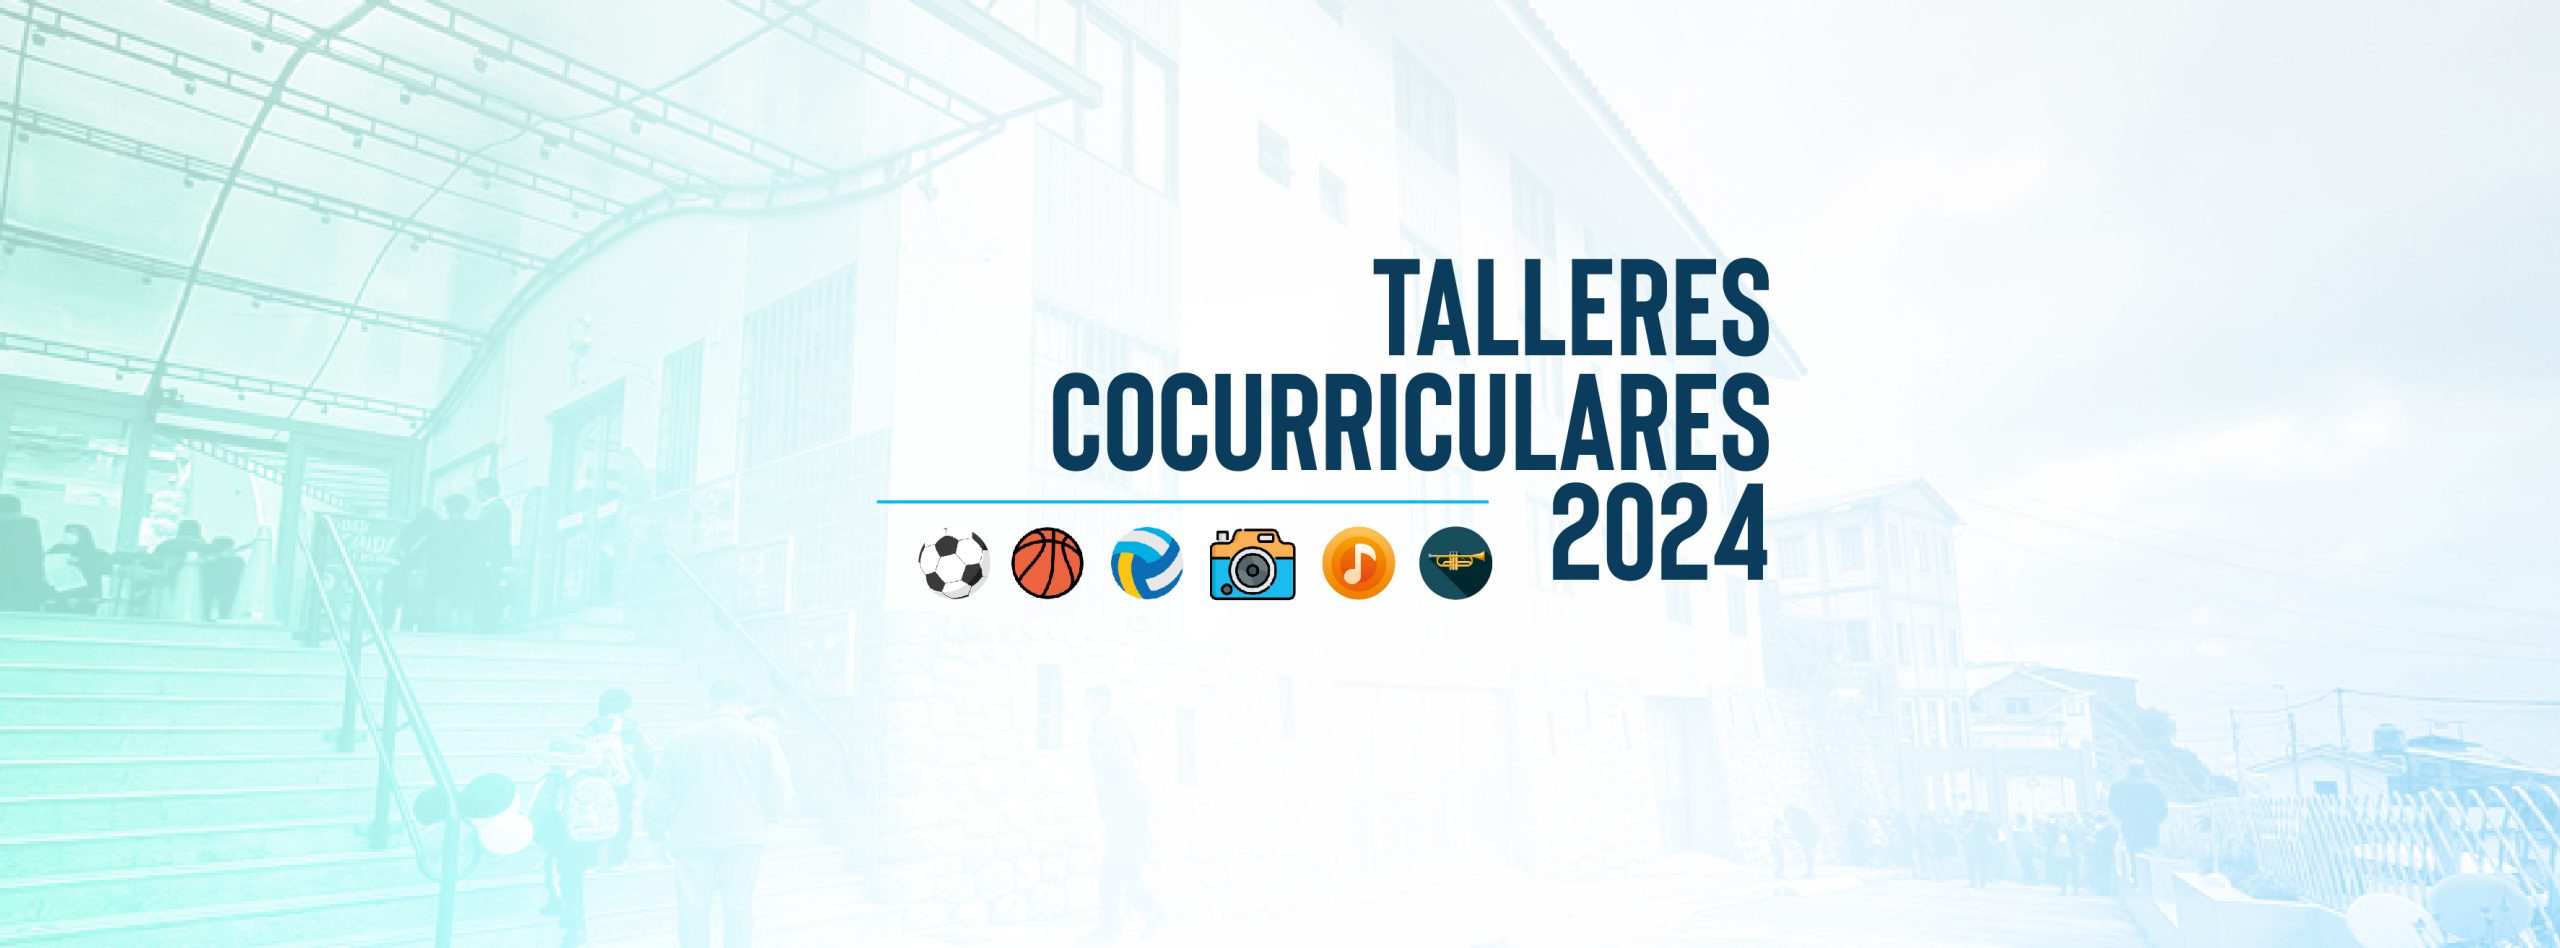 Talleres Cocurriculares 2024